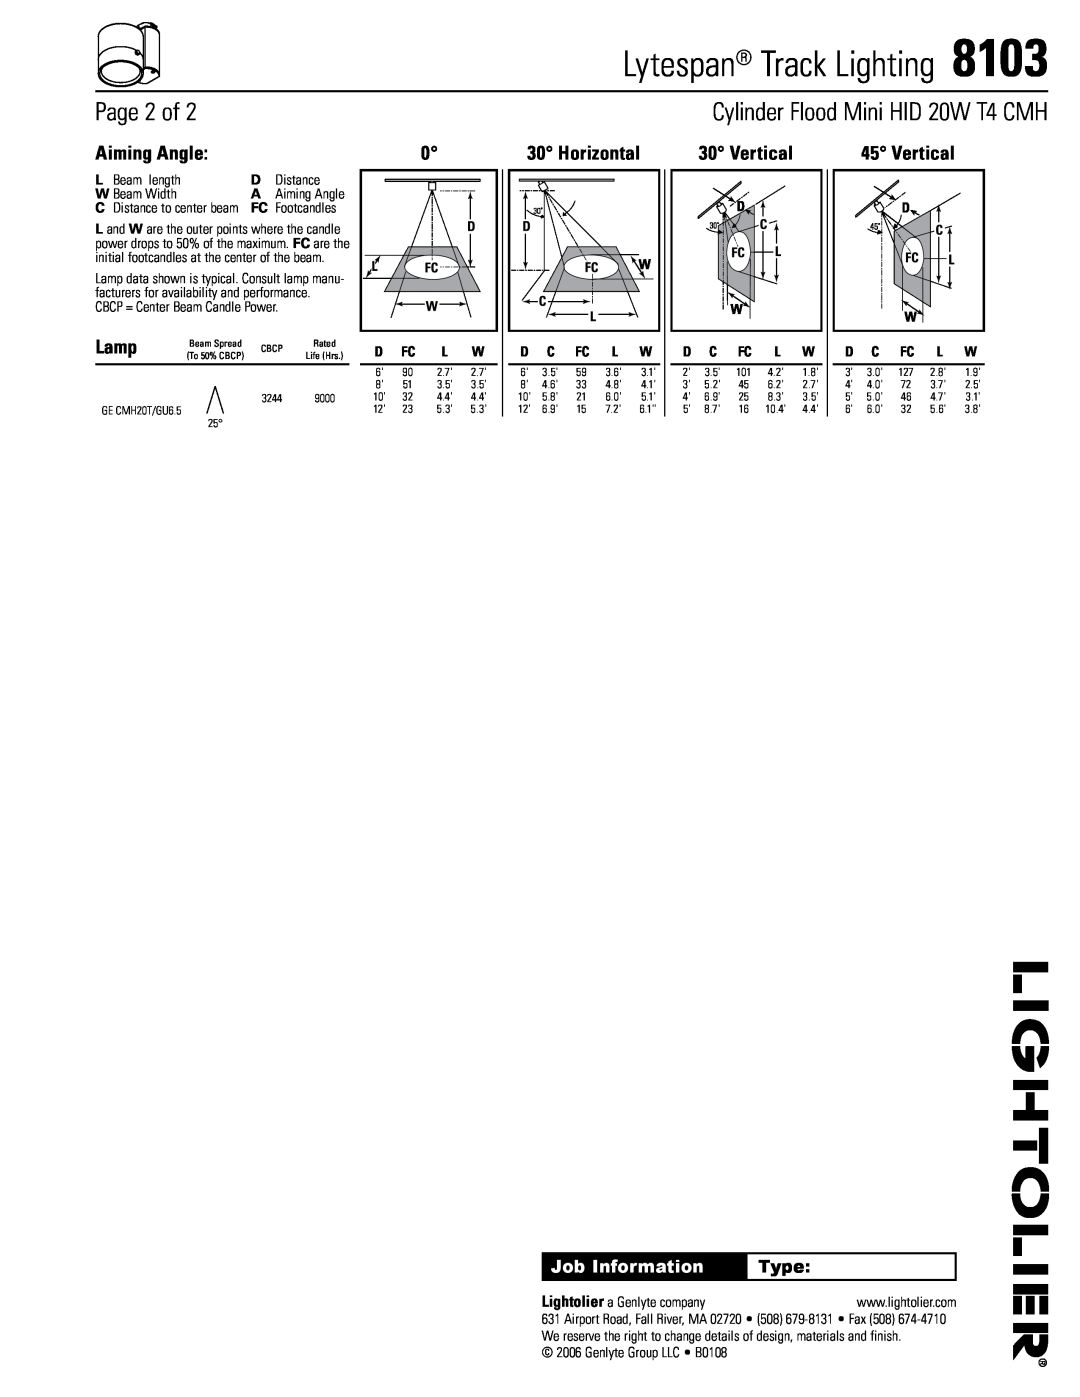 Lightolier 8103 Aiming Angle, Horizontal, Vertical, Lytespan Track Lighting, Page of, Cylinder Flood Mini HID 20W T4 CMH 